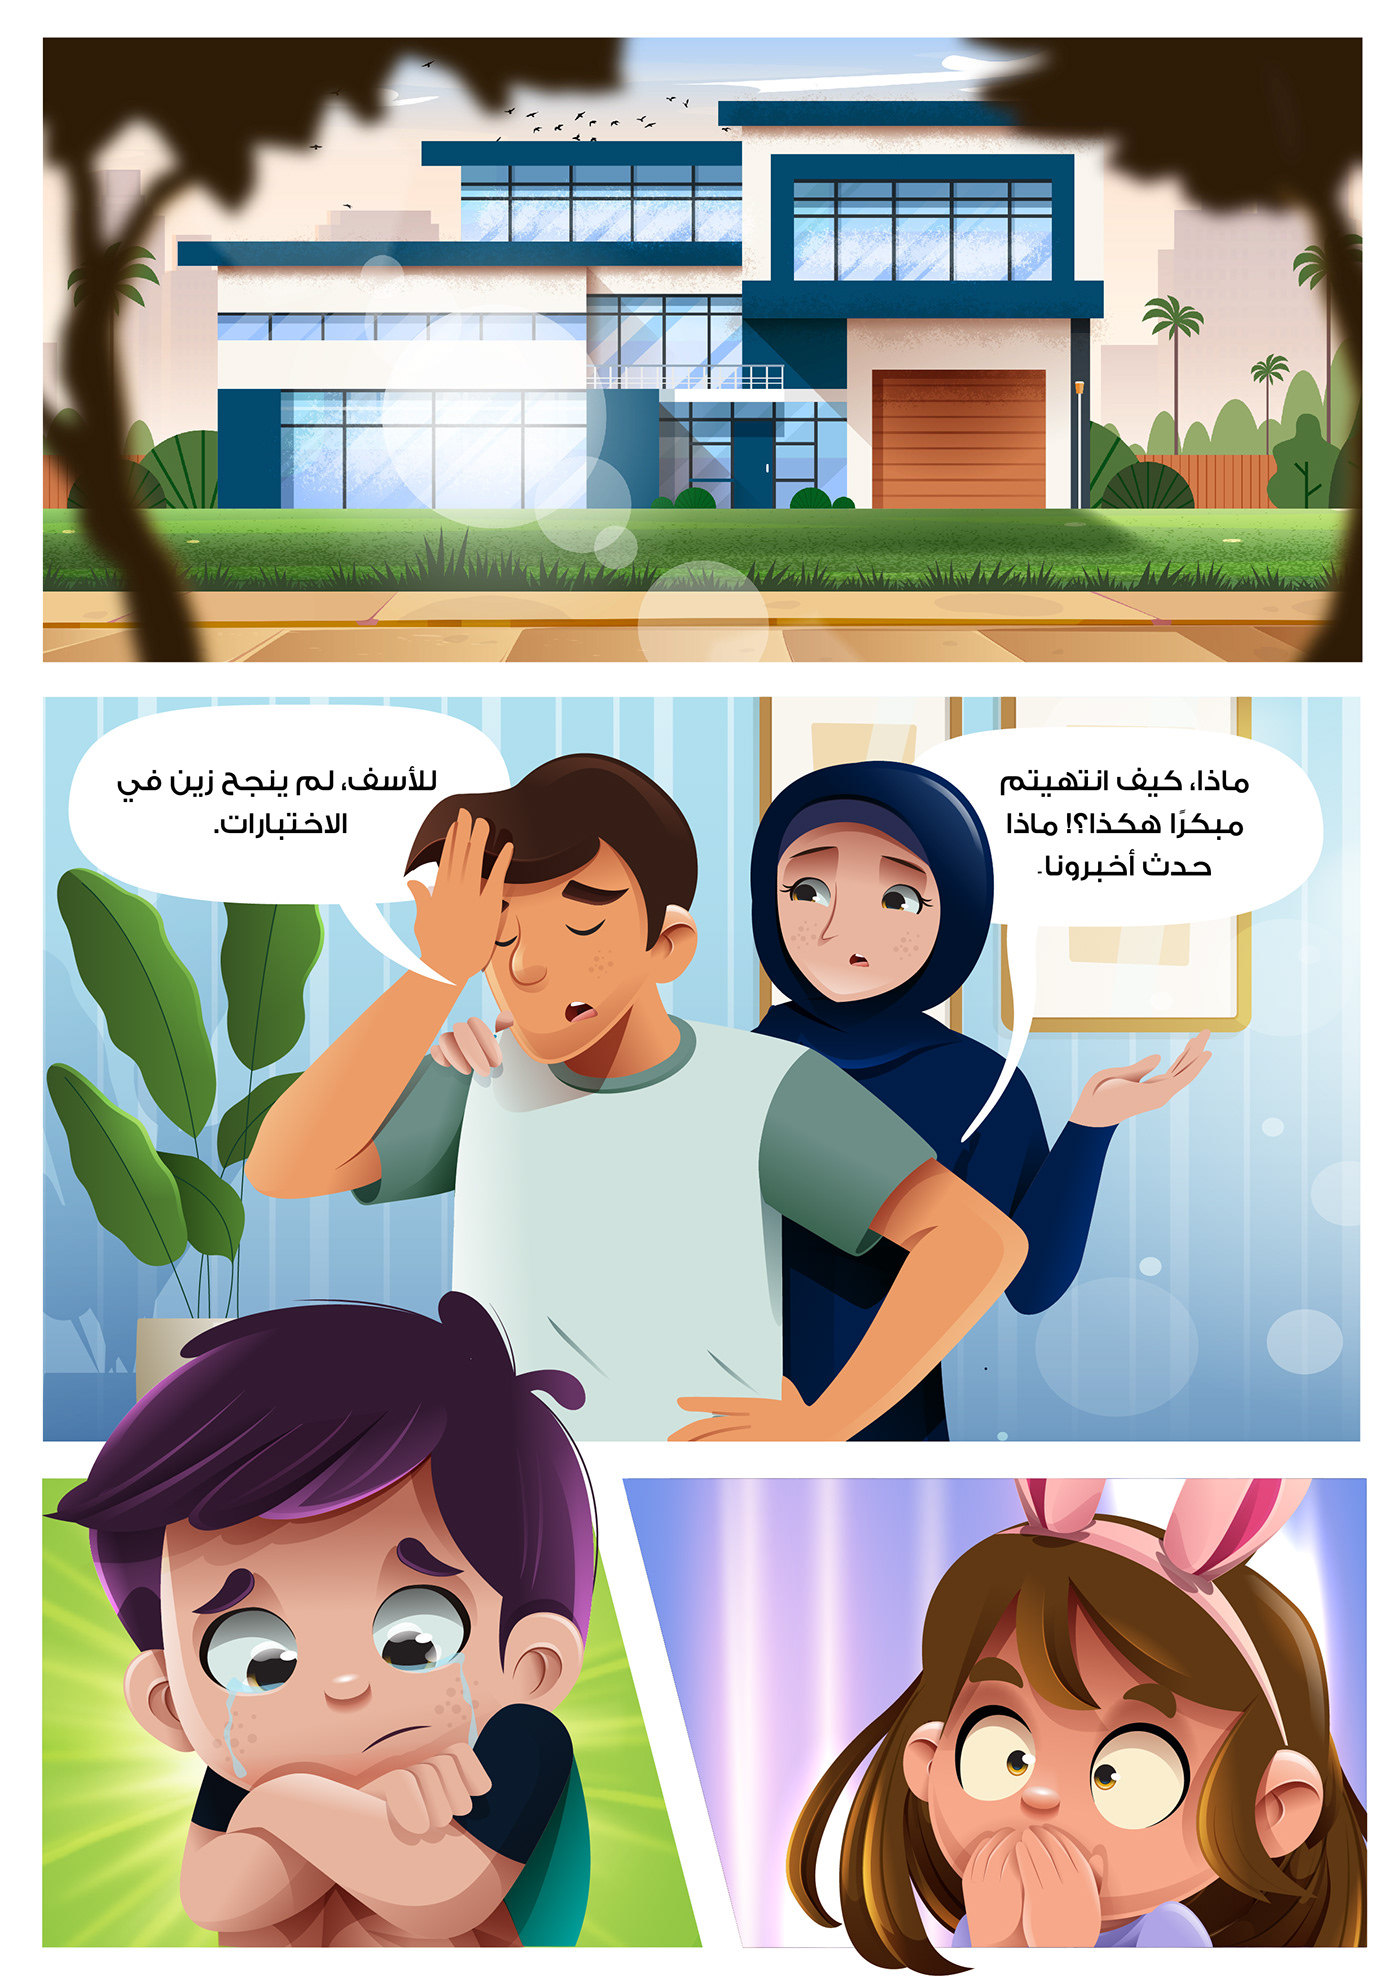 serag basel Arab kids Character design  Saudi Arabia kids story children illustration children's book digital illustration muslim character